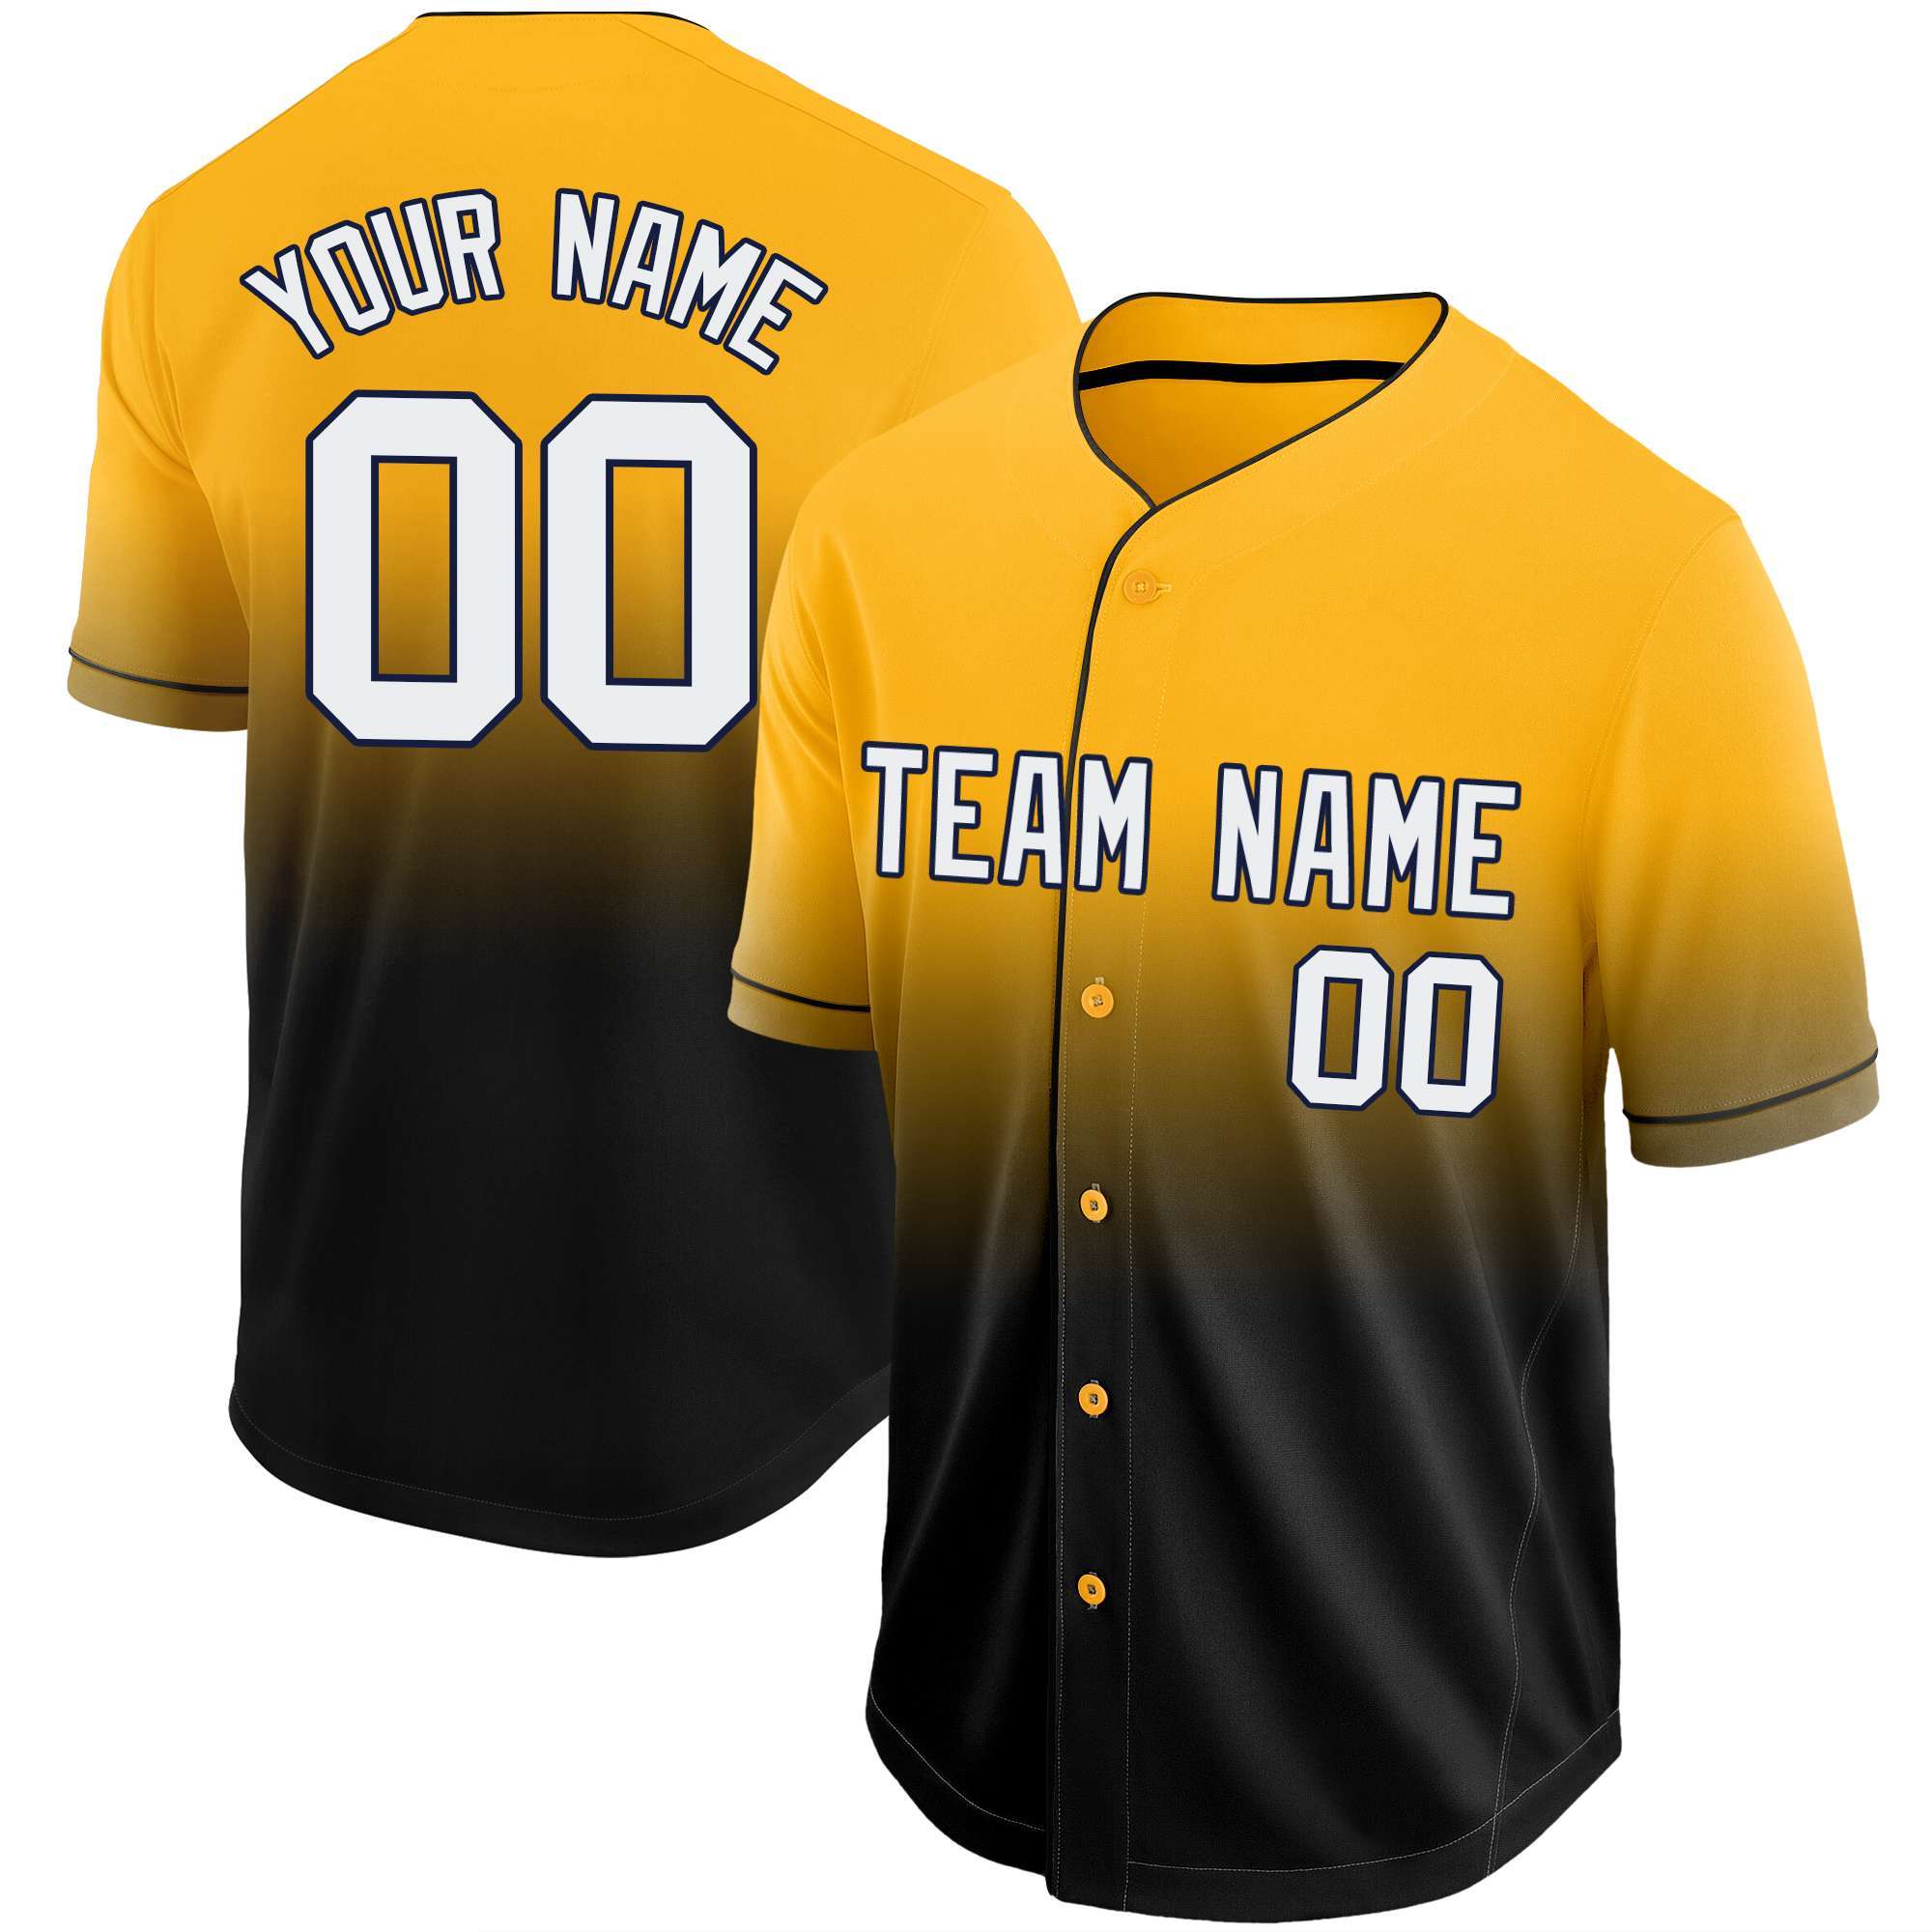 Custom Baseball Jersey Short Sleeve Cardigan Softball Sport Shirt Jersey Gradient Color Printing Design Team Name 2